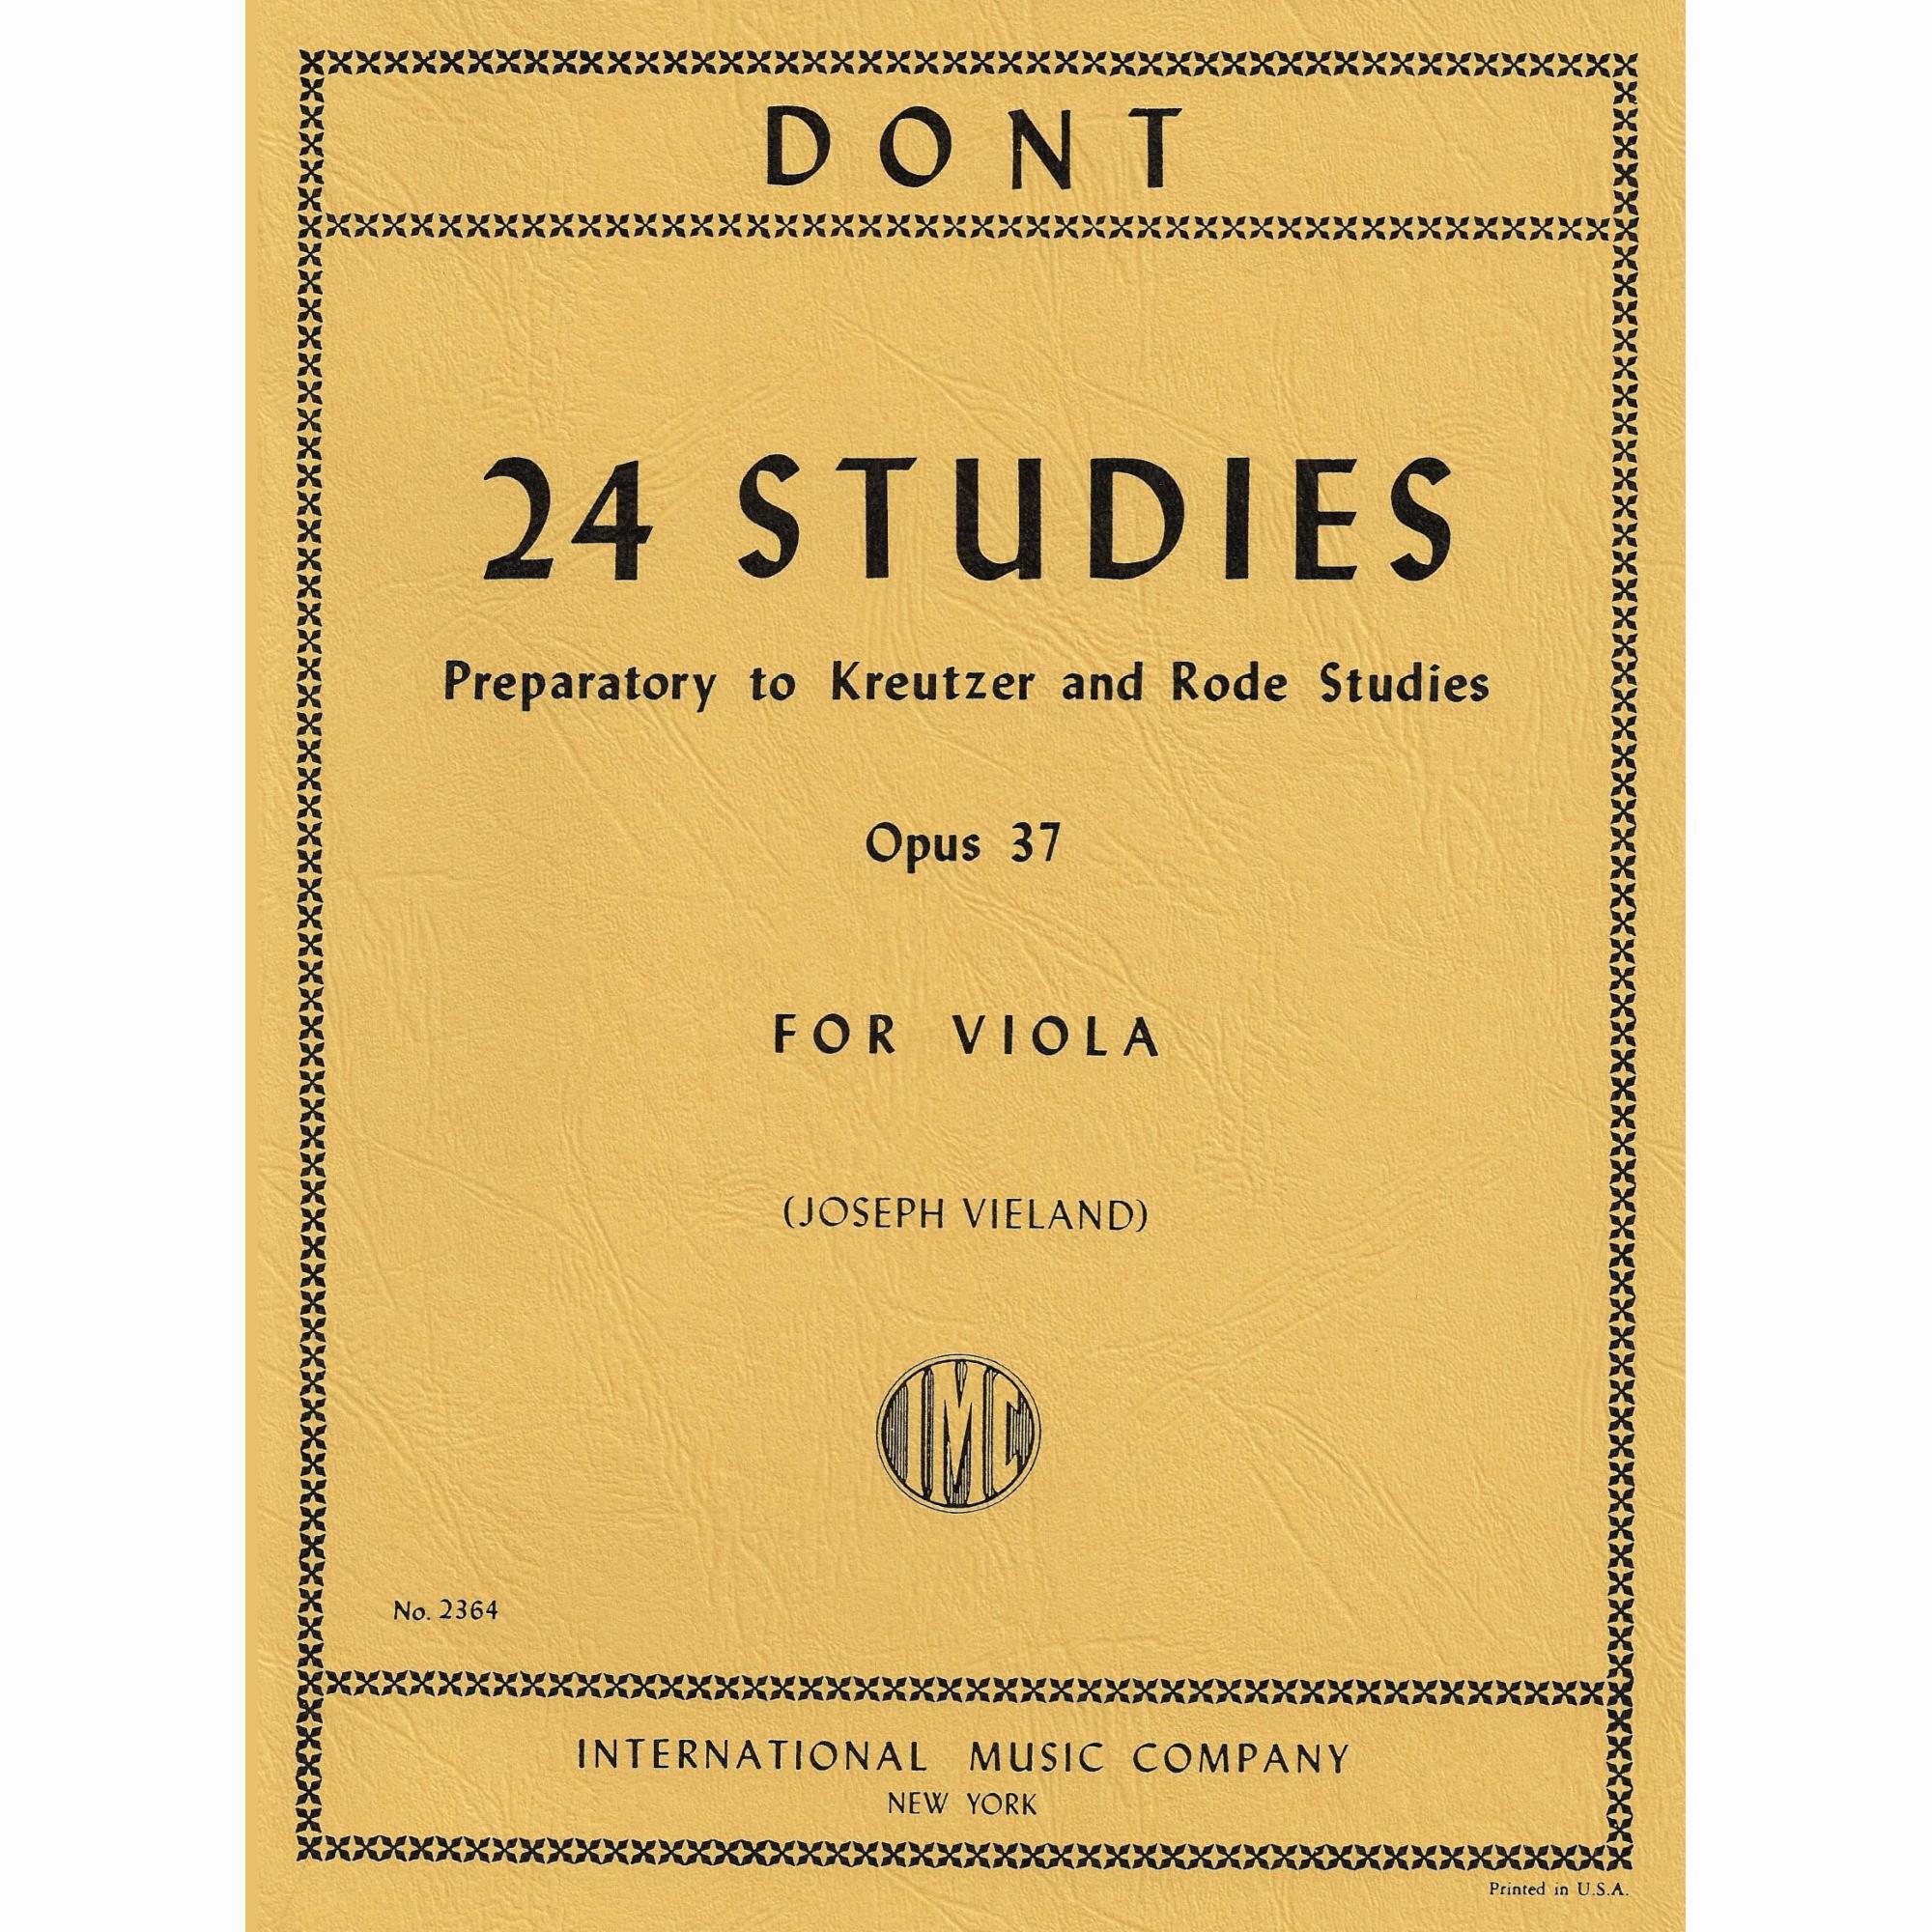 Dont -- 24 Studies, Op. 37 for Viola